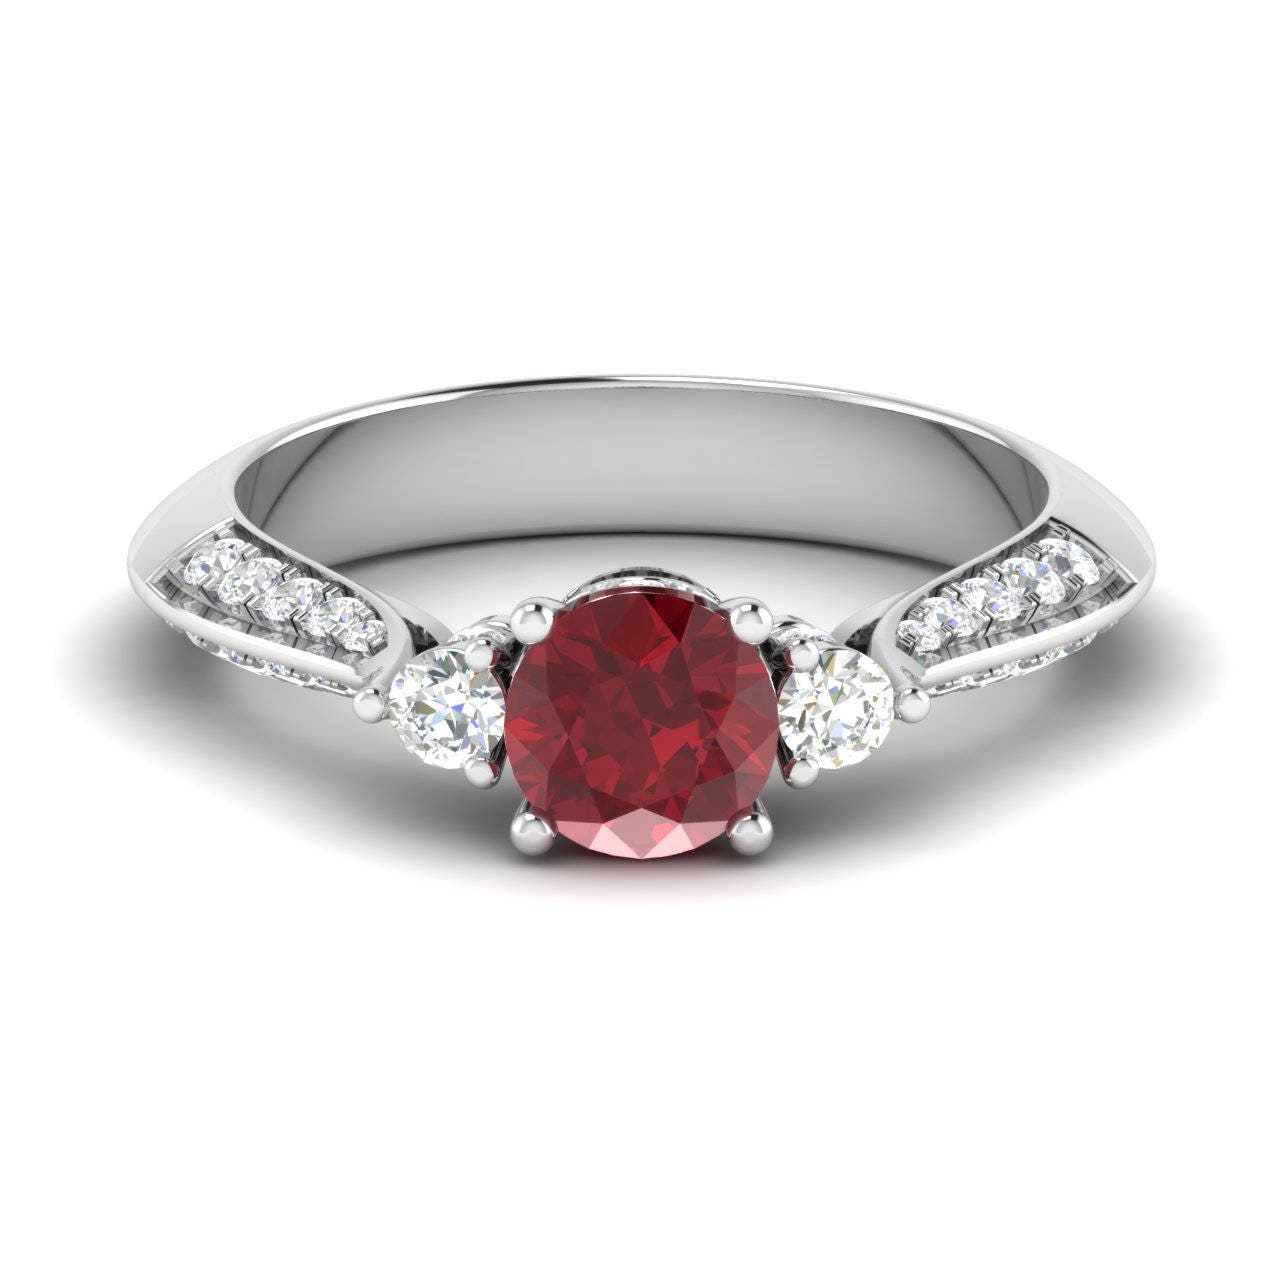 Round Cut Ruby Rings Ruby & Diamond Ring in 14k White Gold - Etsy